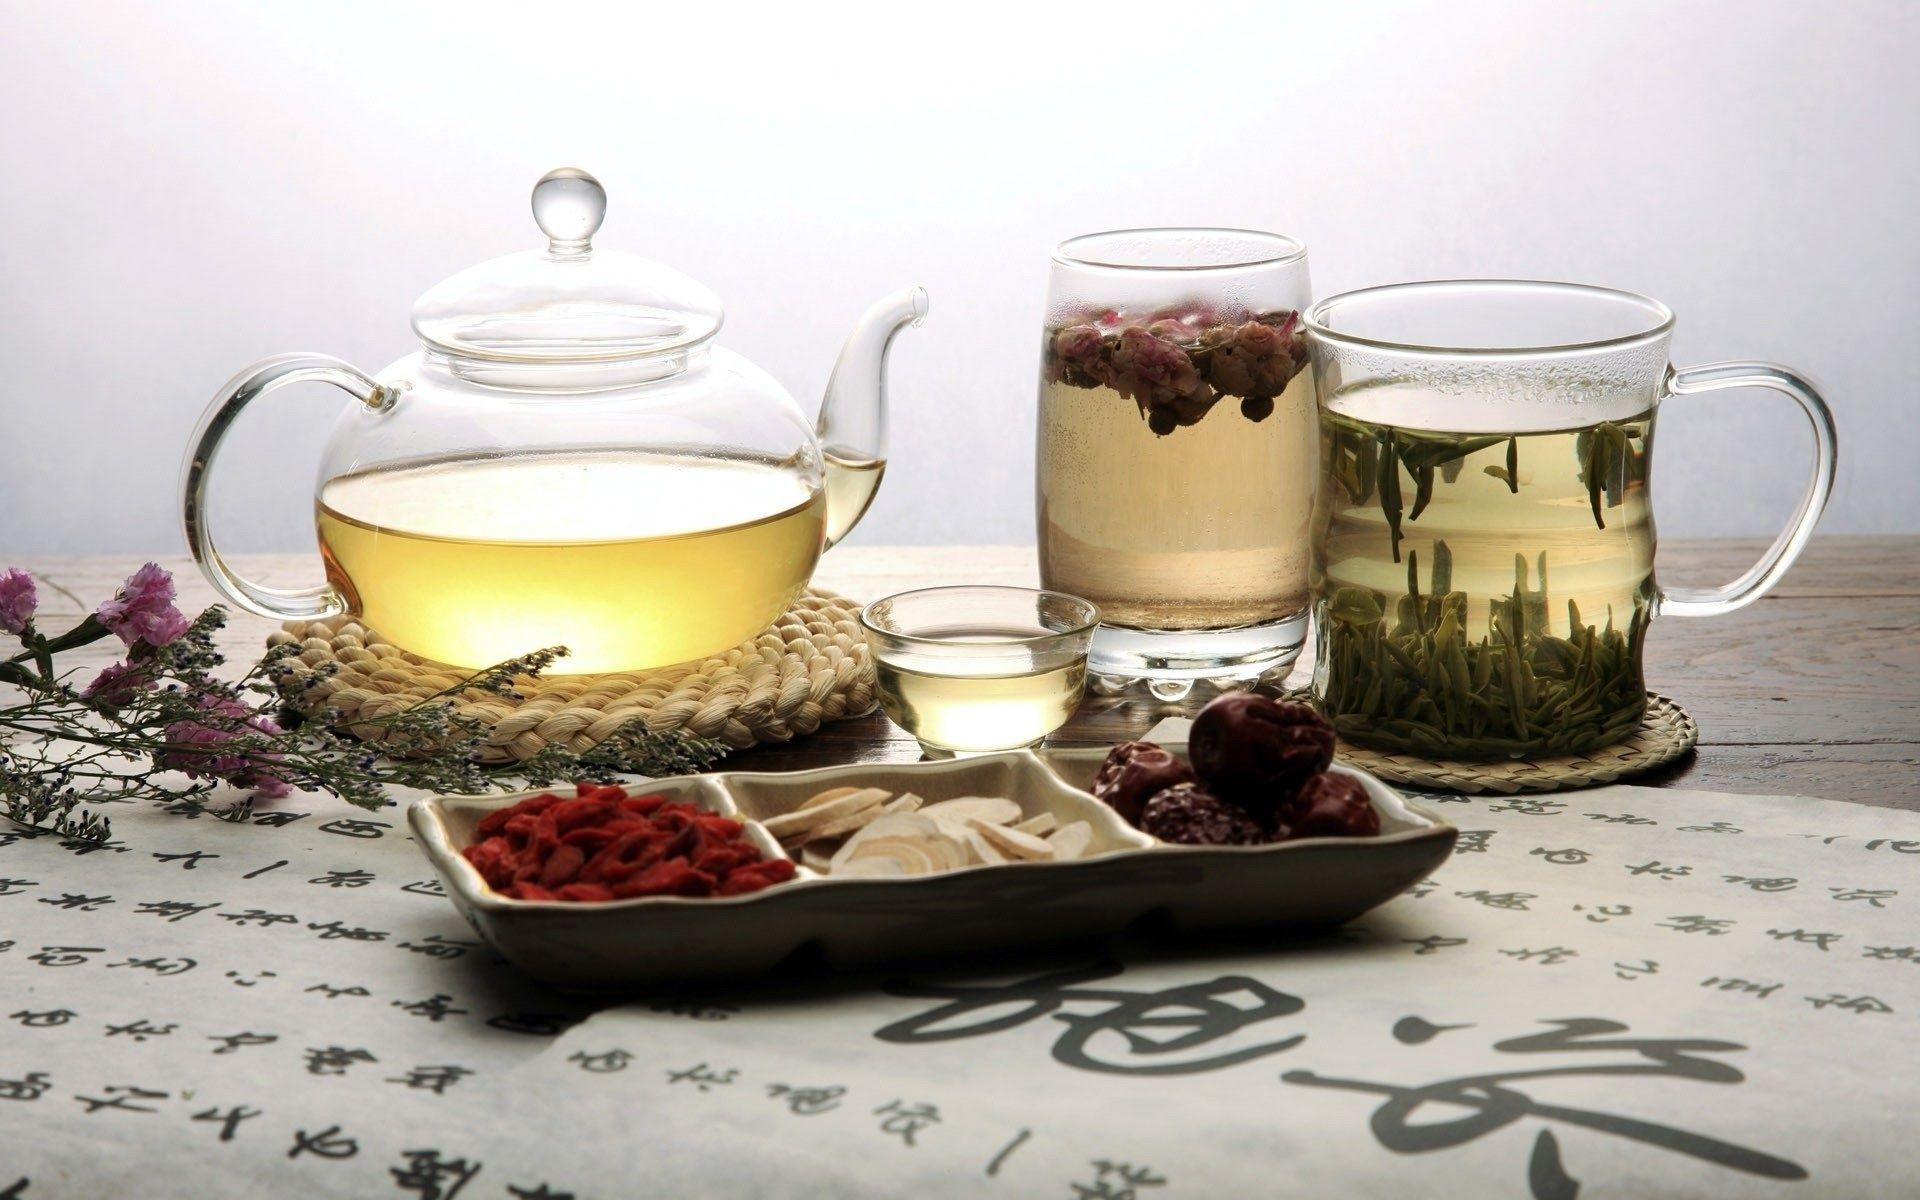 Tea Leaves and Herbs